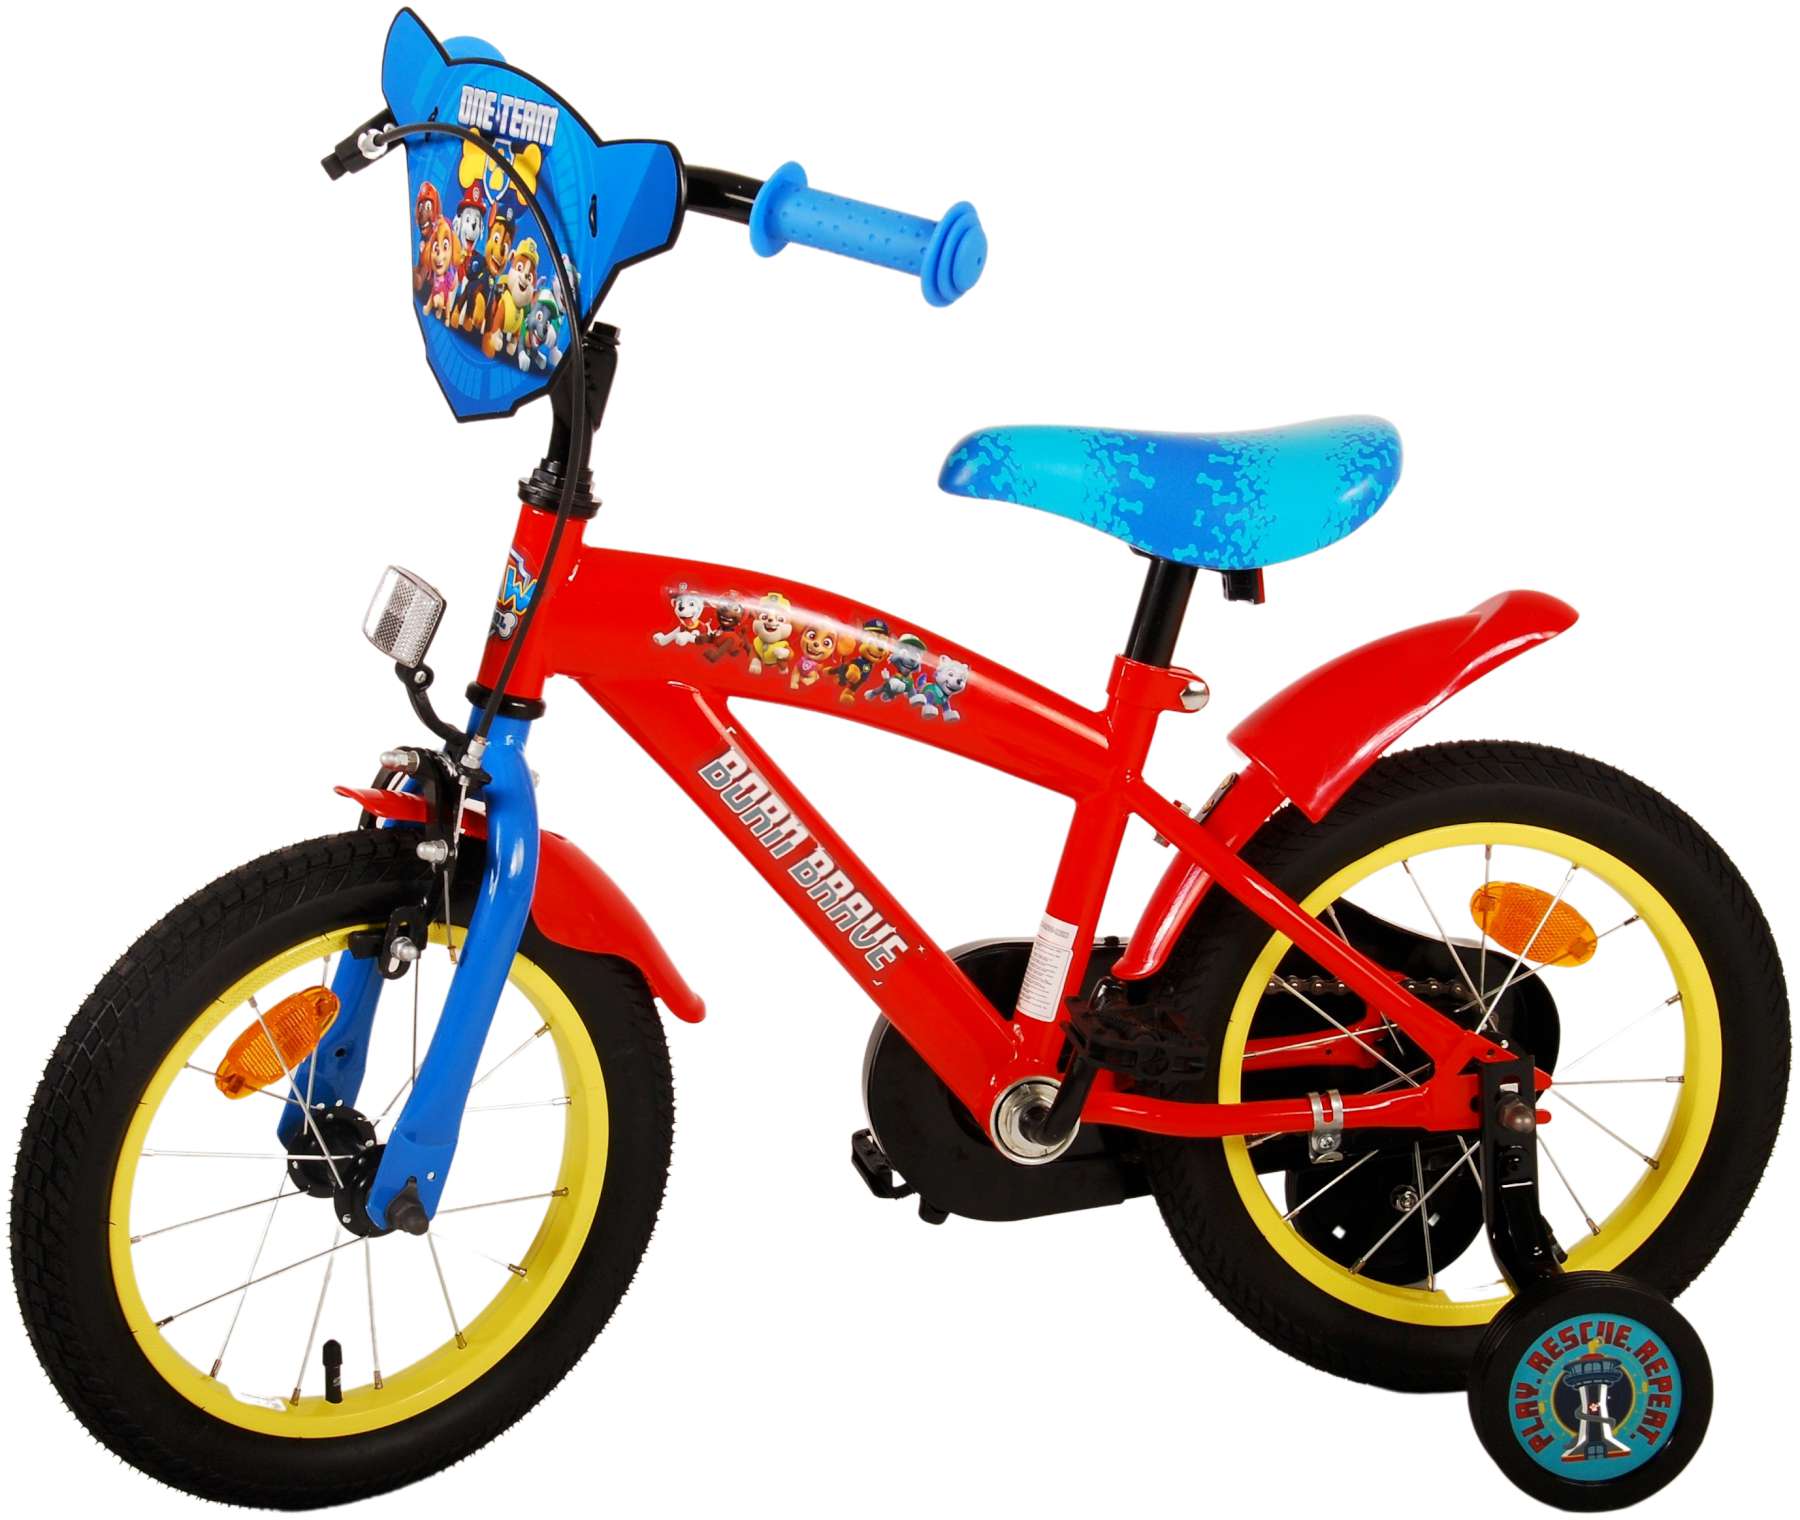 Kinderfahrrad Paw Patrol für Jungen 14 Zoll Kinderrad in Rot/Blau